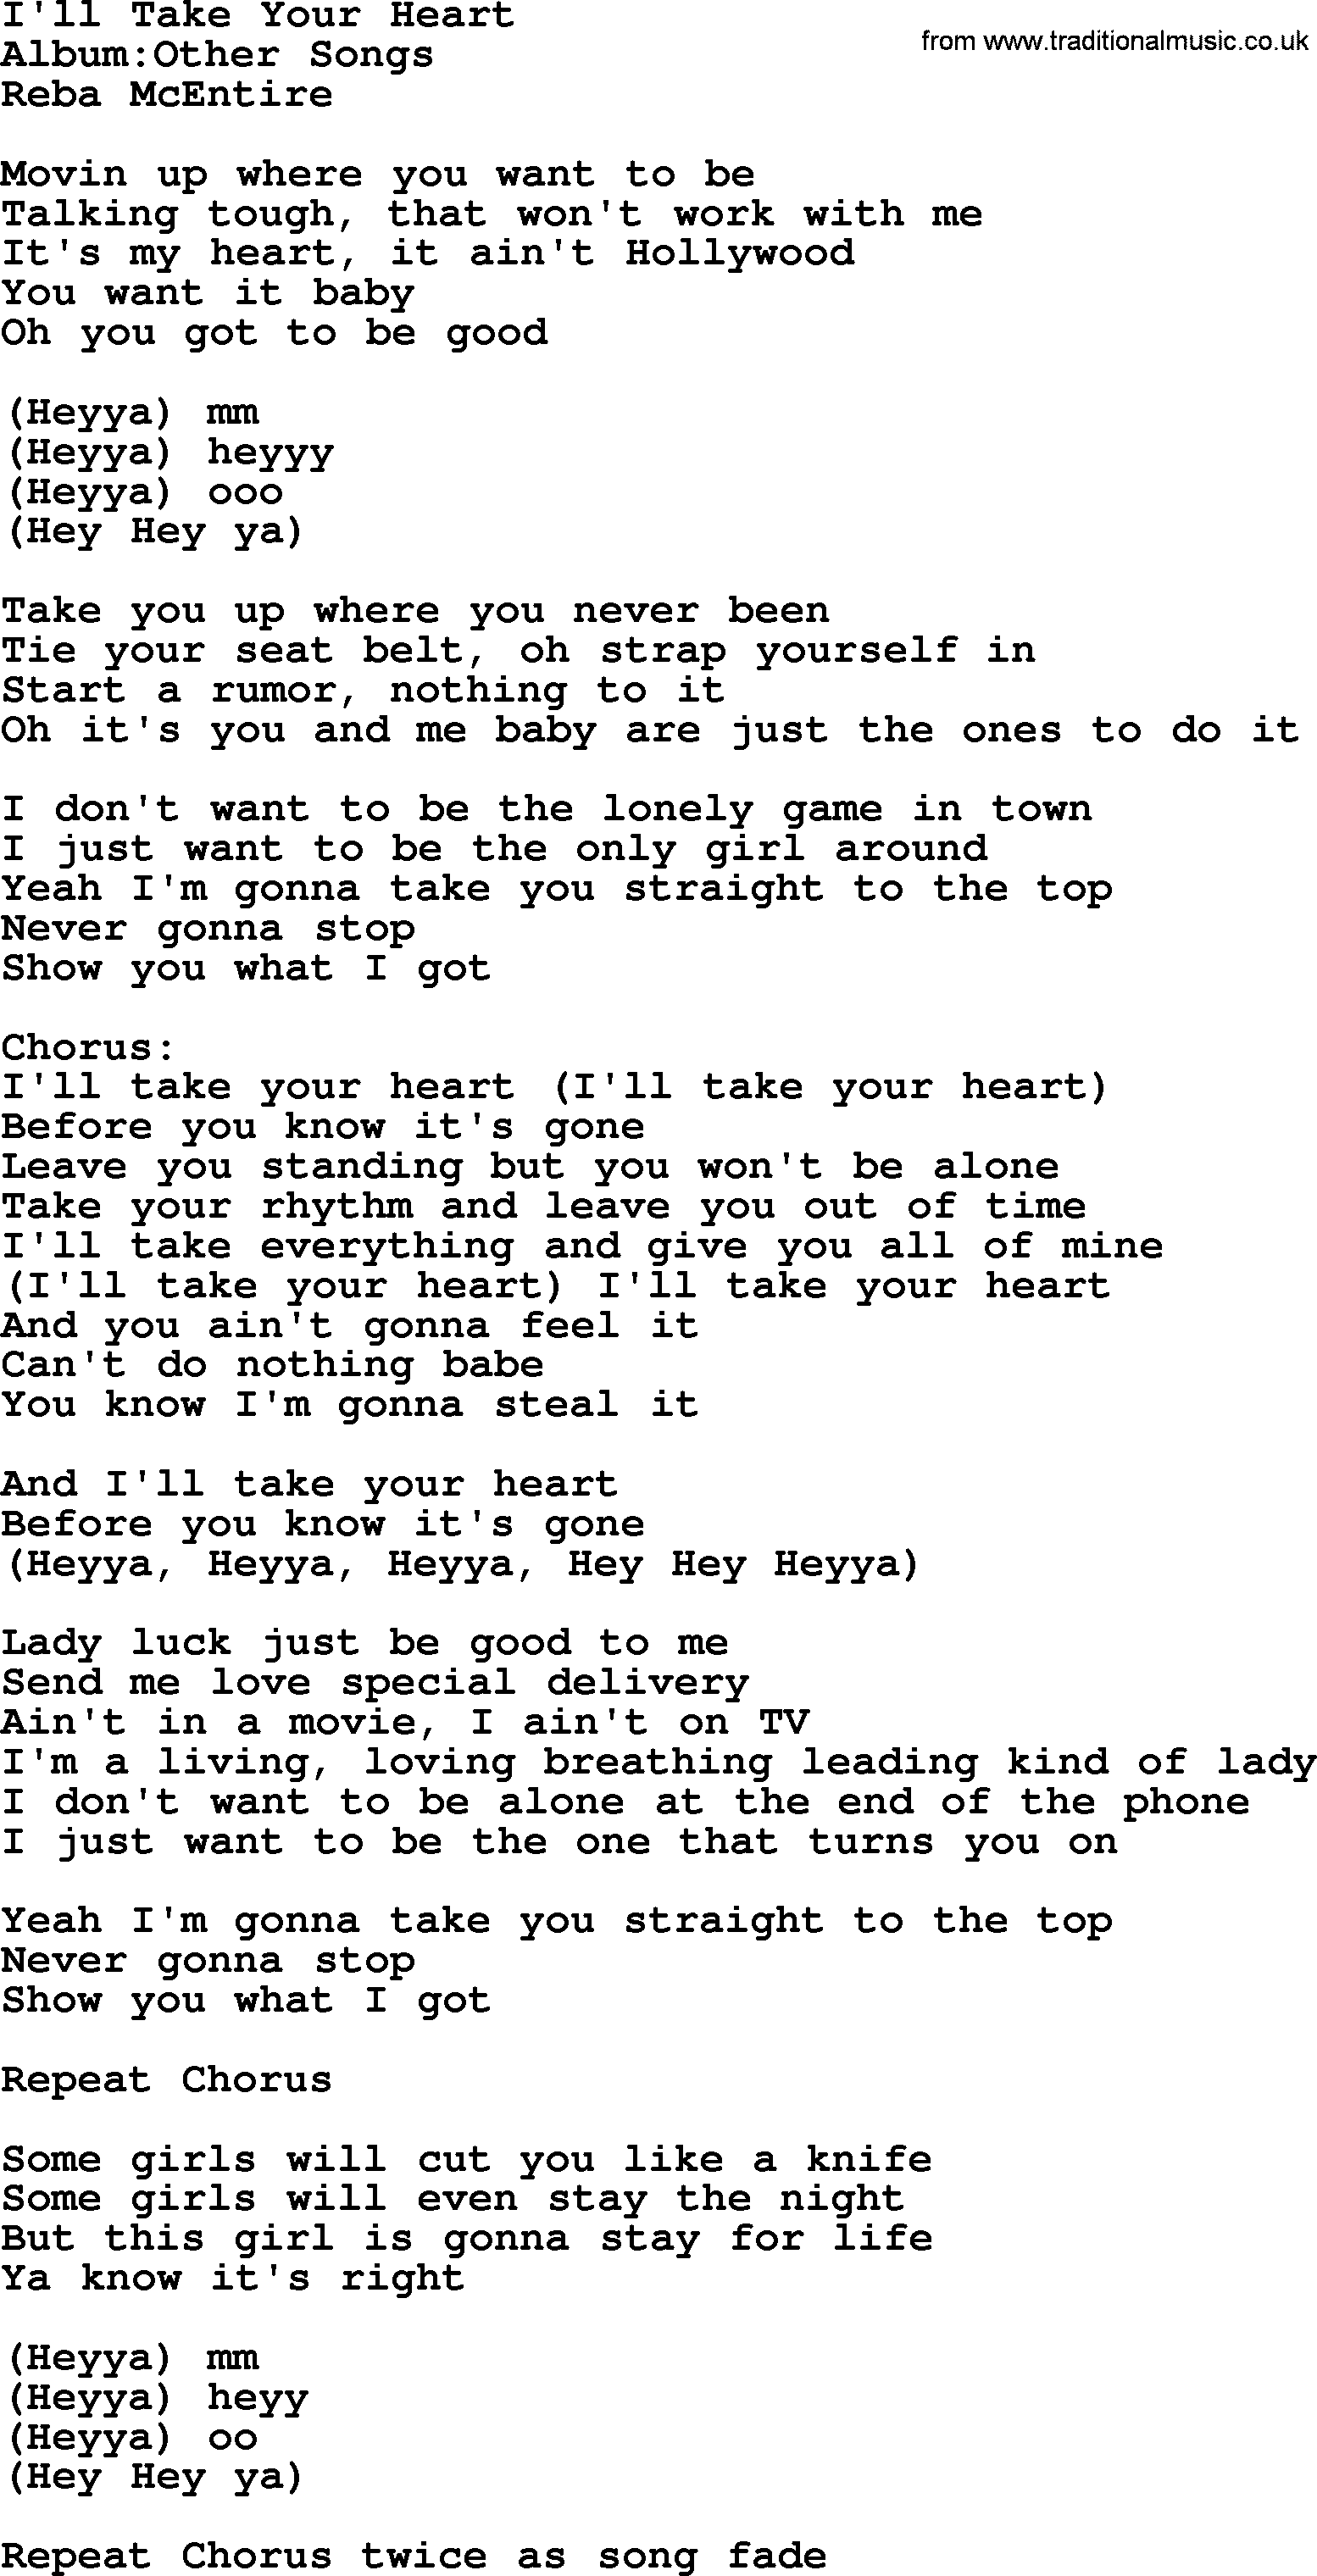 Reba McEntire song: I'll Take Your Heart lyrics